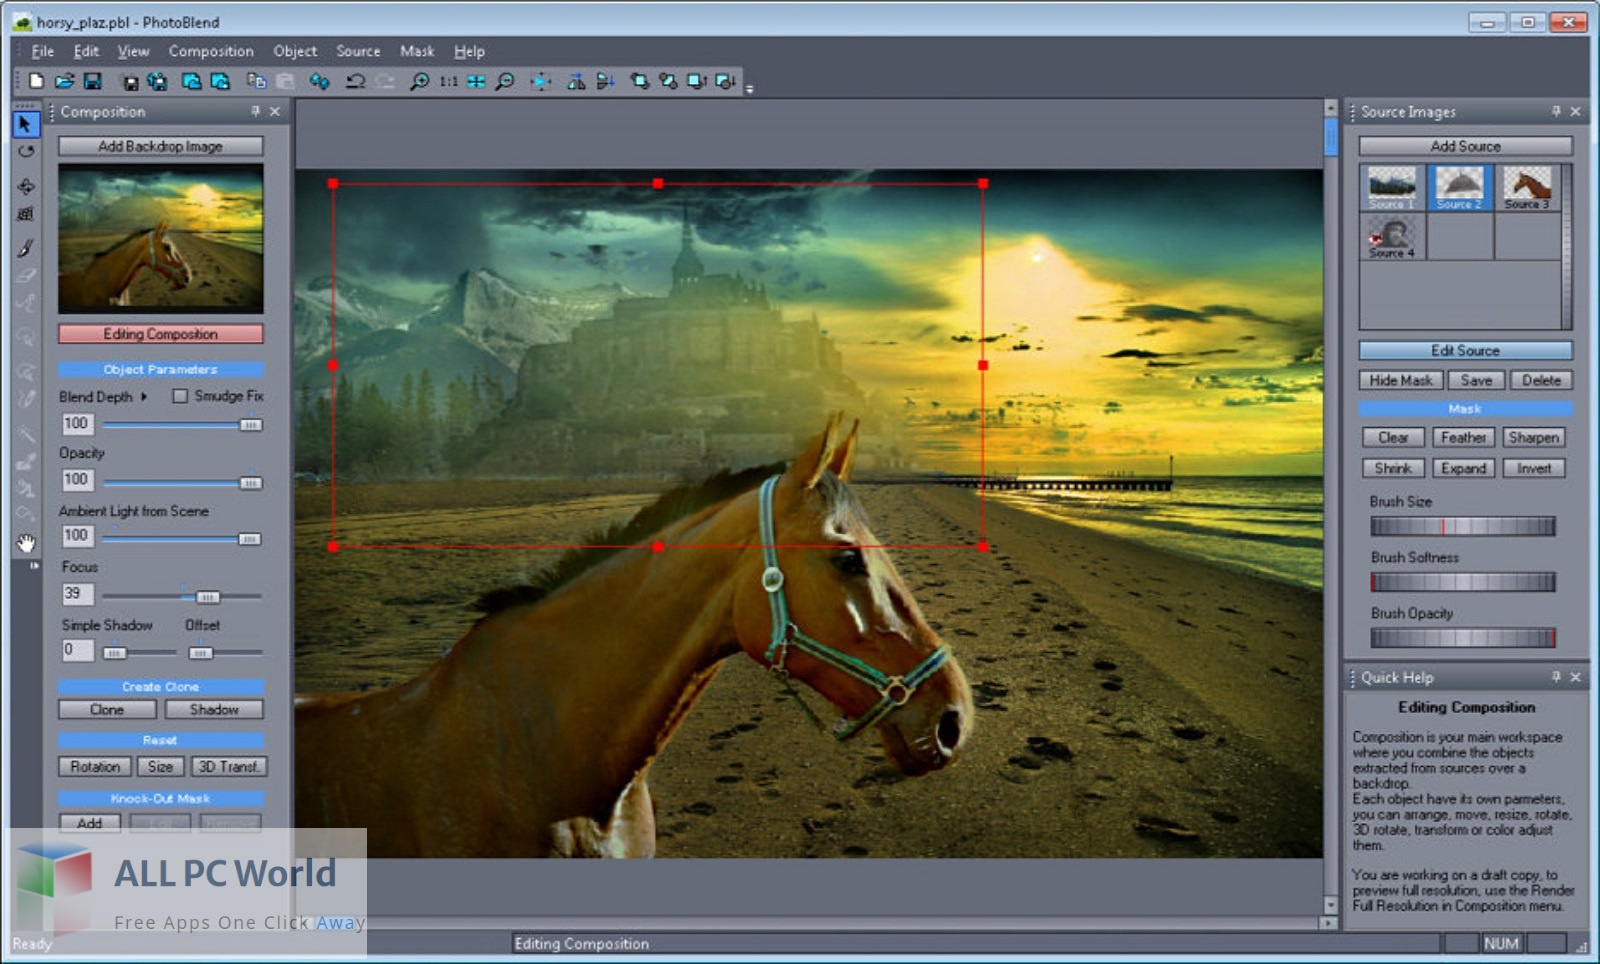 MediaChance Photo-Blend 3D 2 Free Setup Download